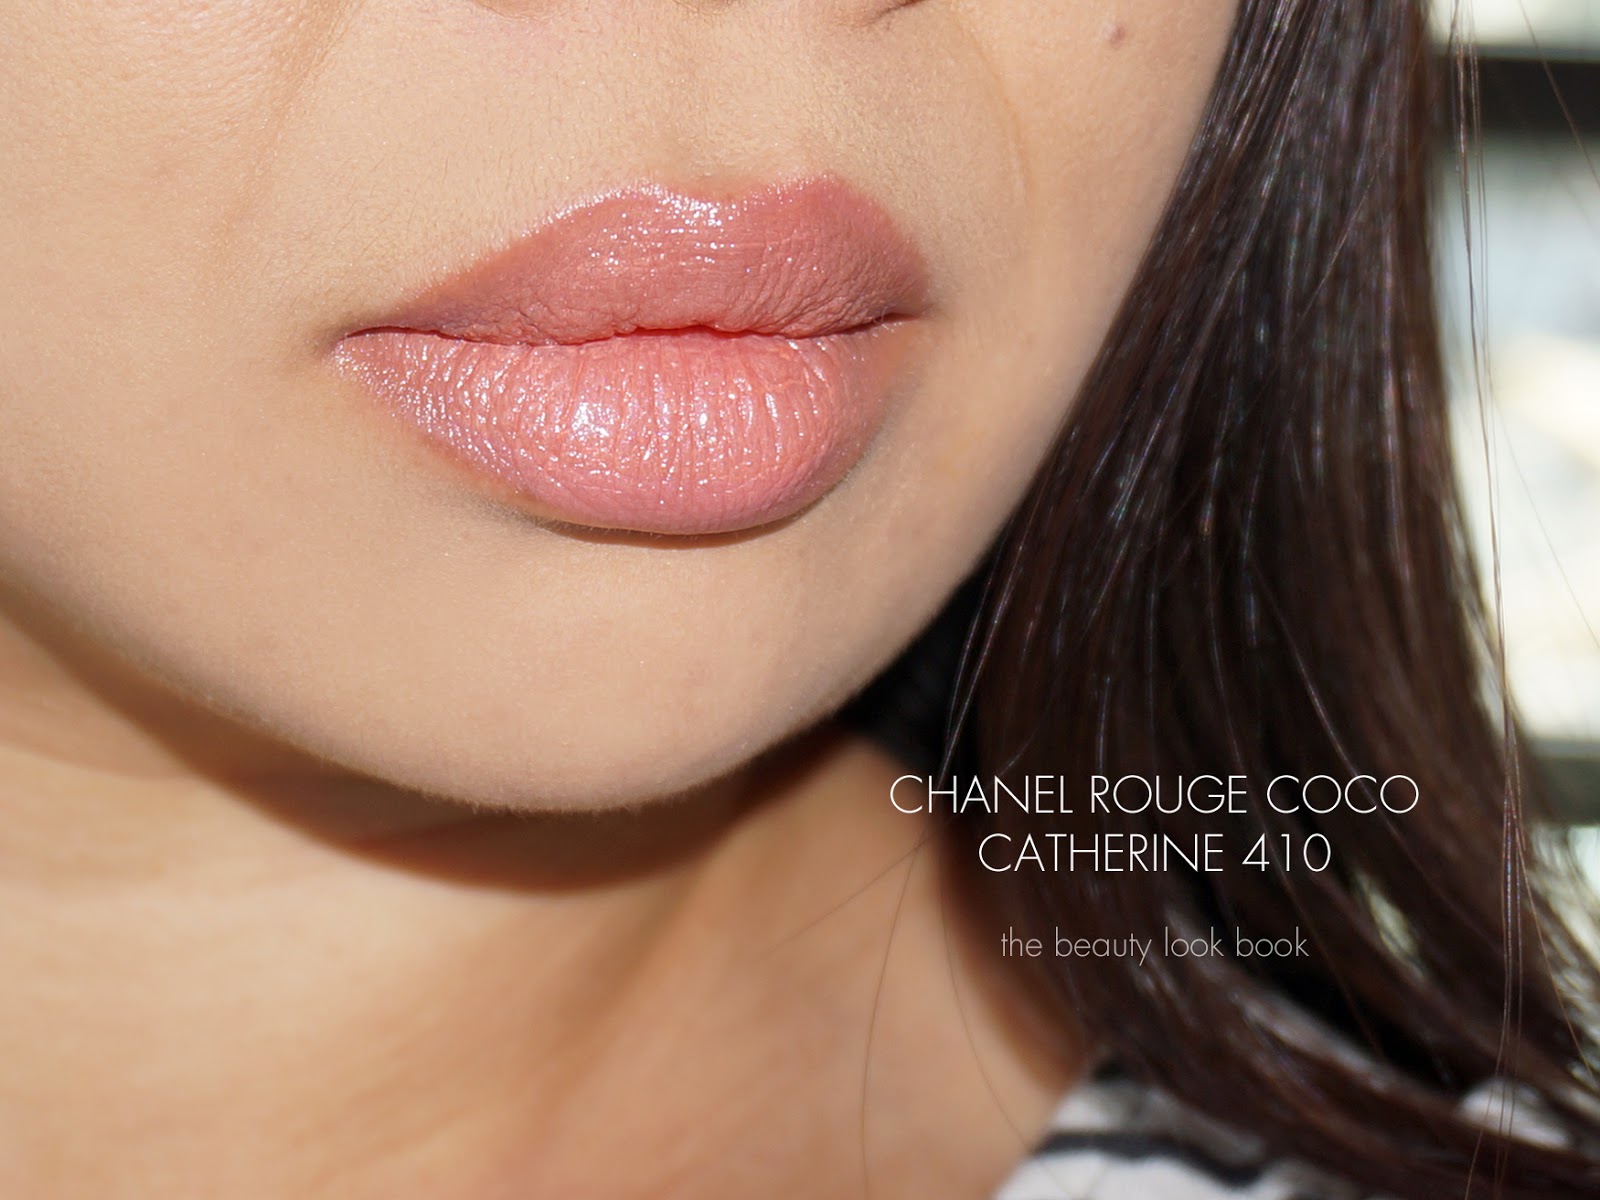 Chanel Rouge Coco Lipstick in Adrienne/Best Chanel Lipstick